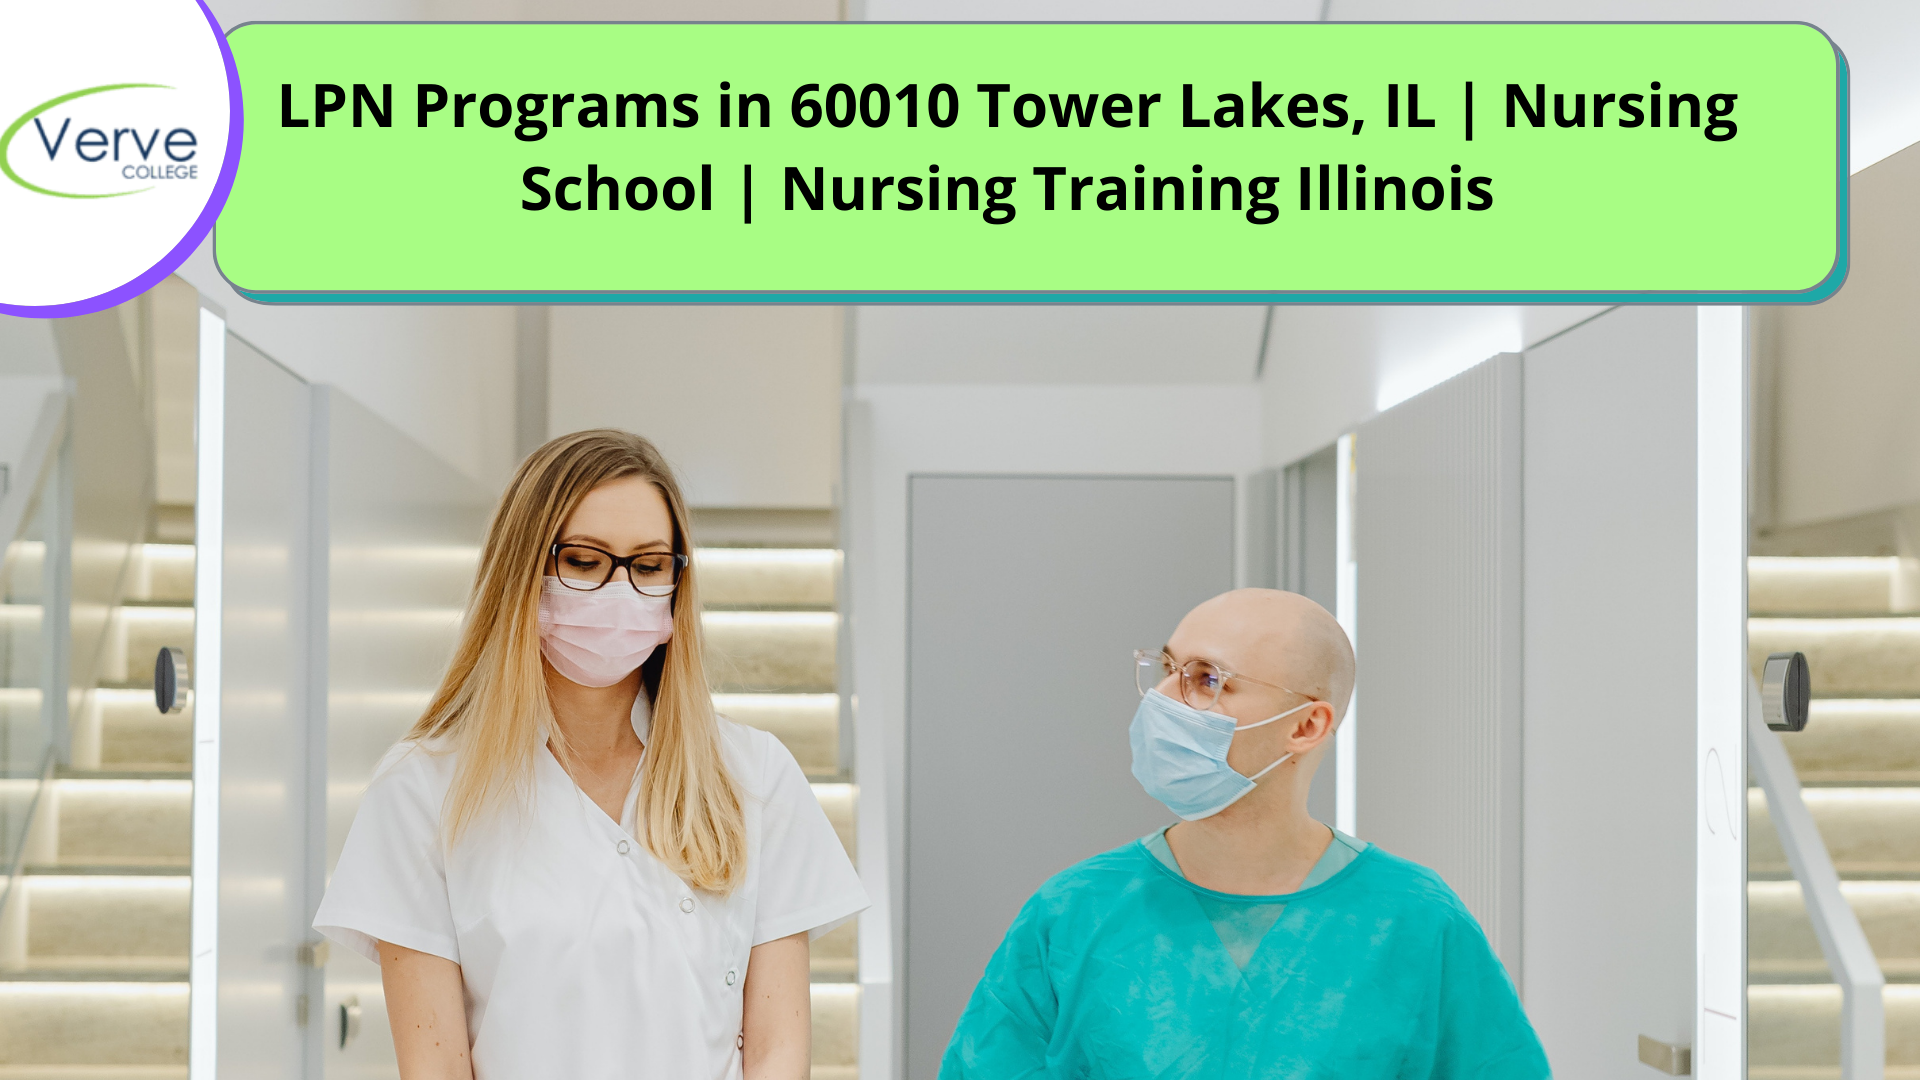 LPN Programs in 60010 Tower Lakes, IL | Nursing School | Nursing Training Illinois